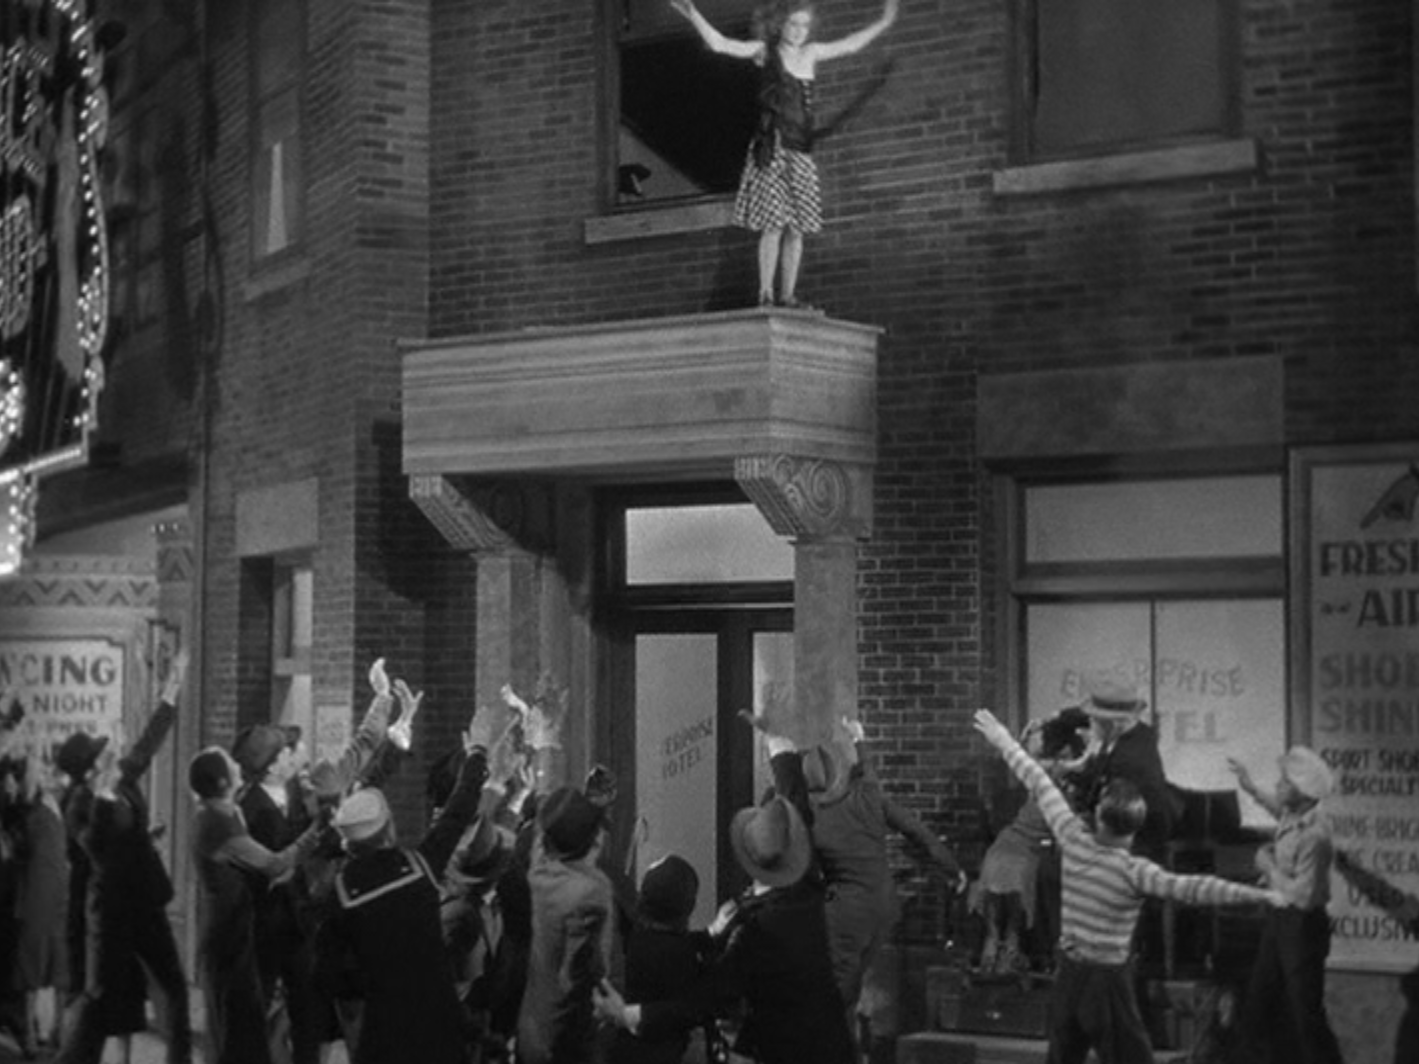 42nd Street 1933 Ruby Keeler Bebe Daniels Warner Baxter